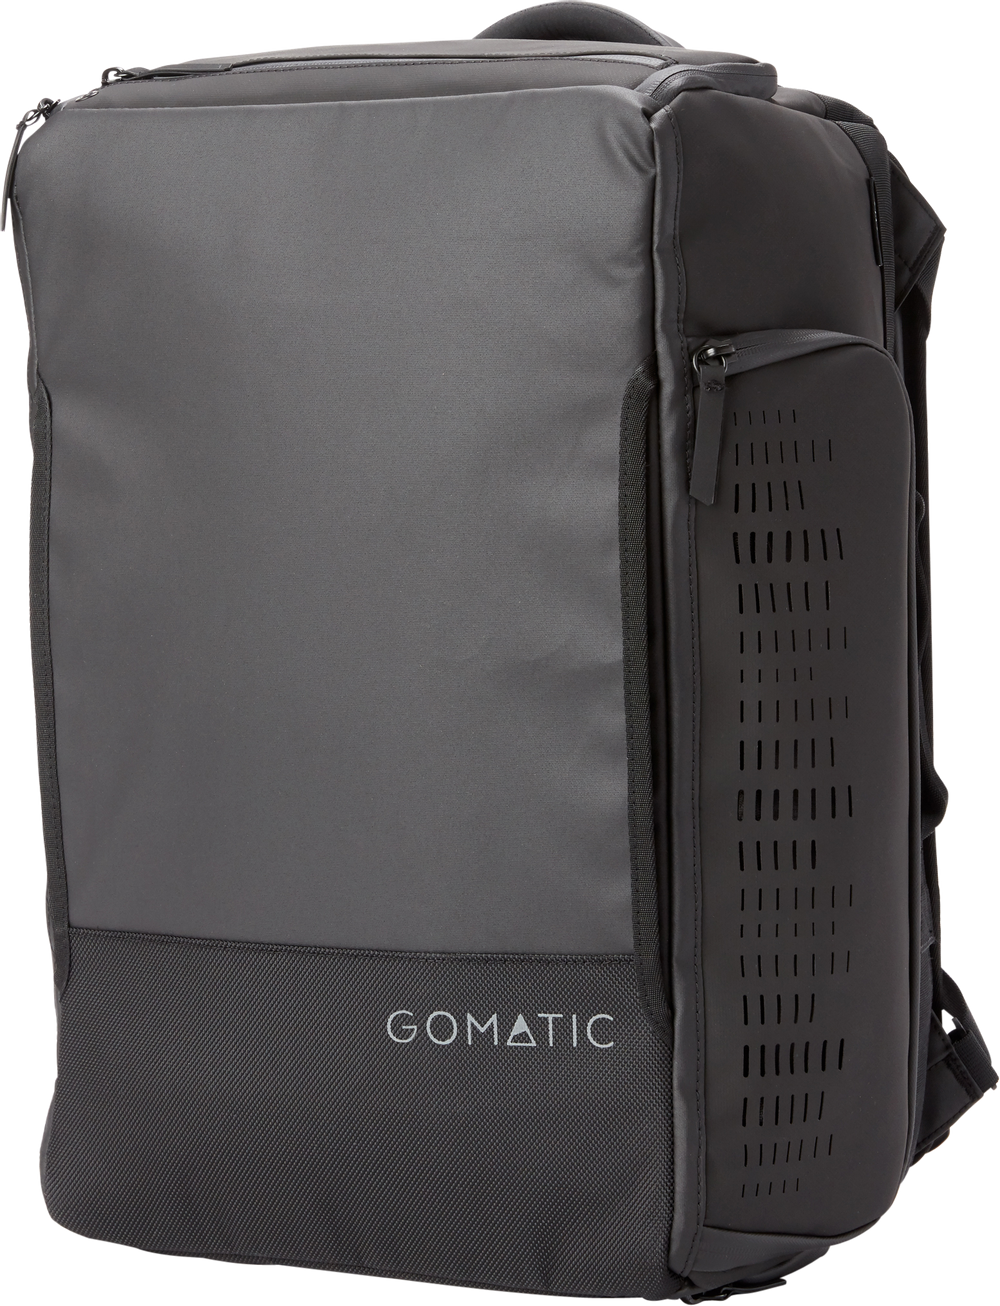 Gomatic 30L Travel Bag V2 01_116614.png